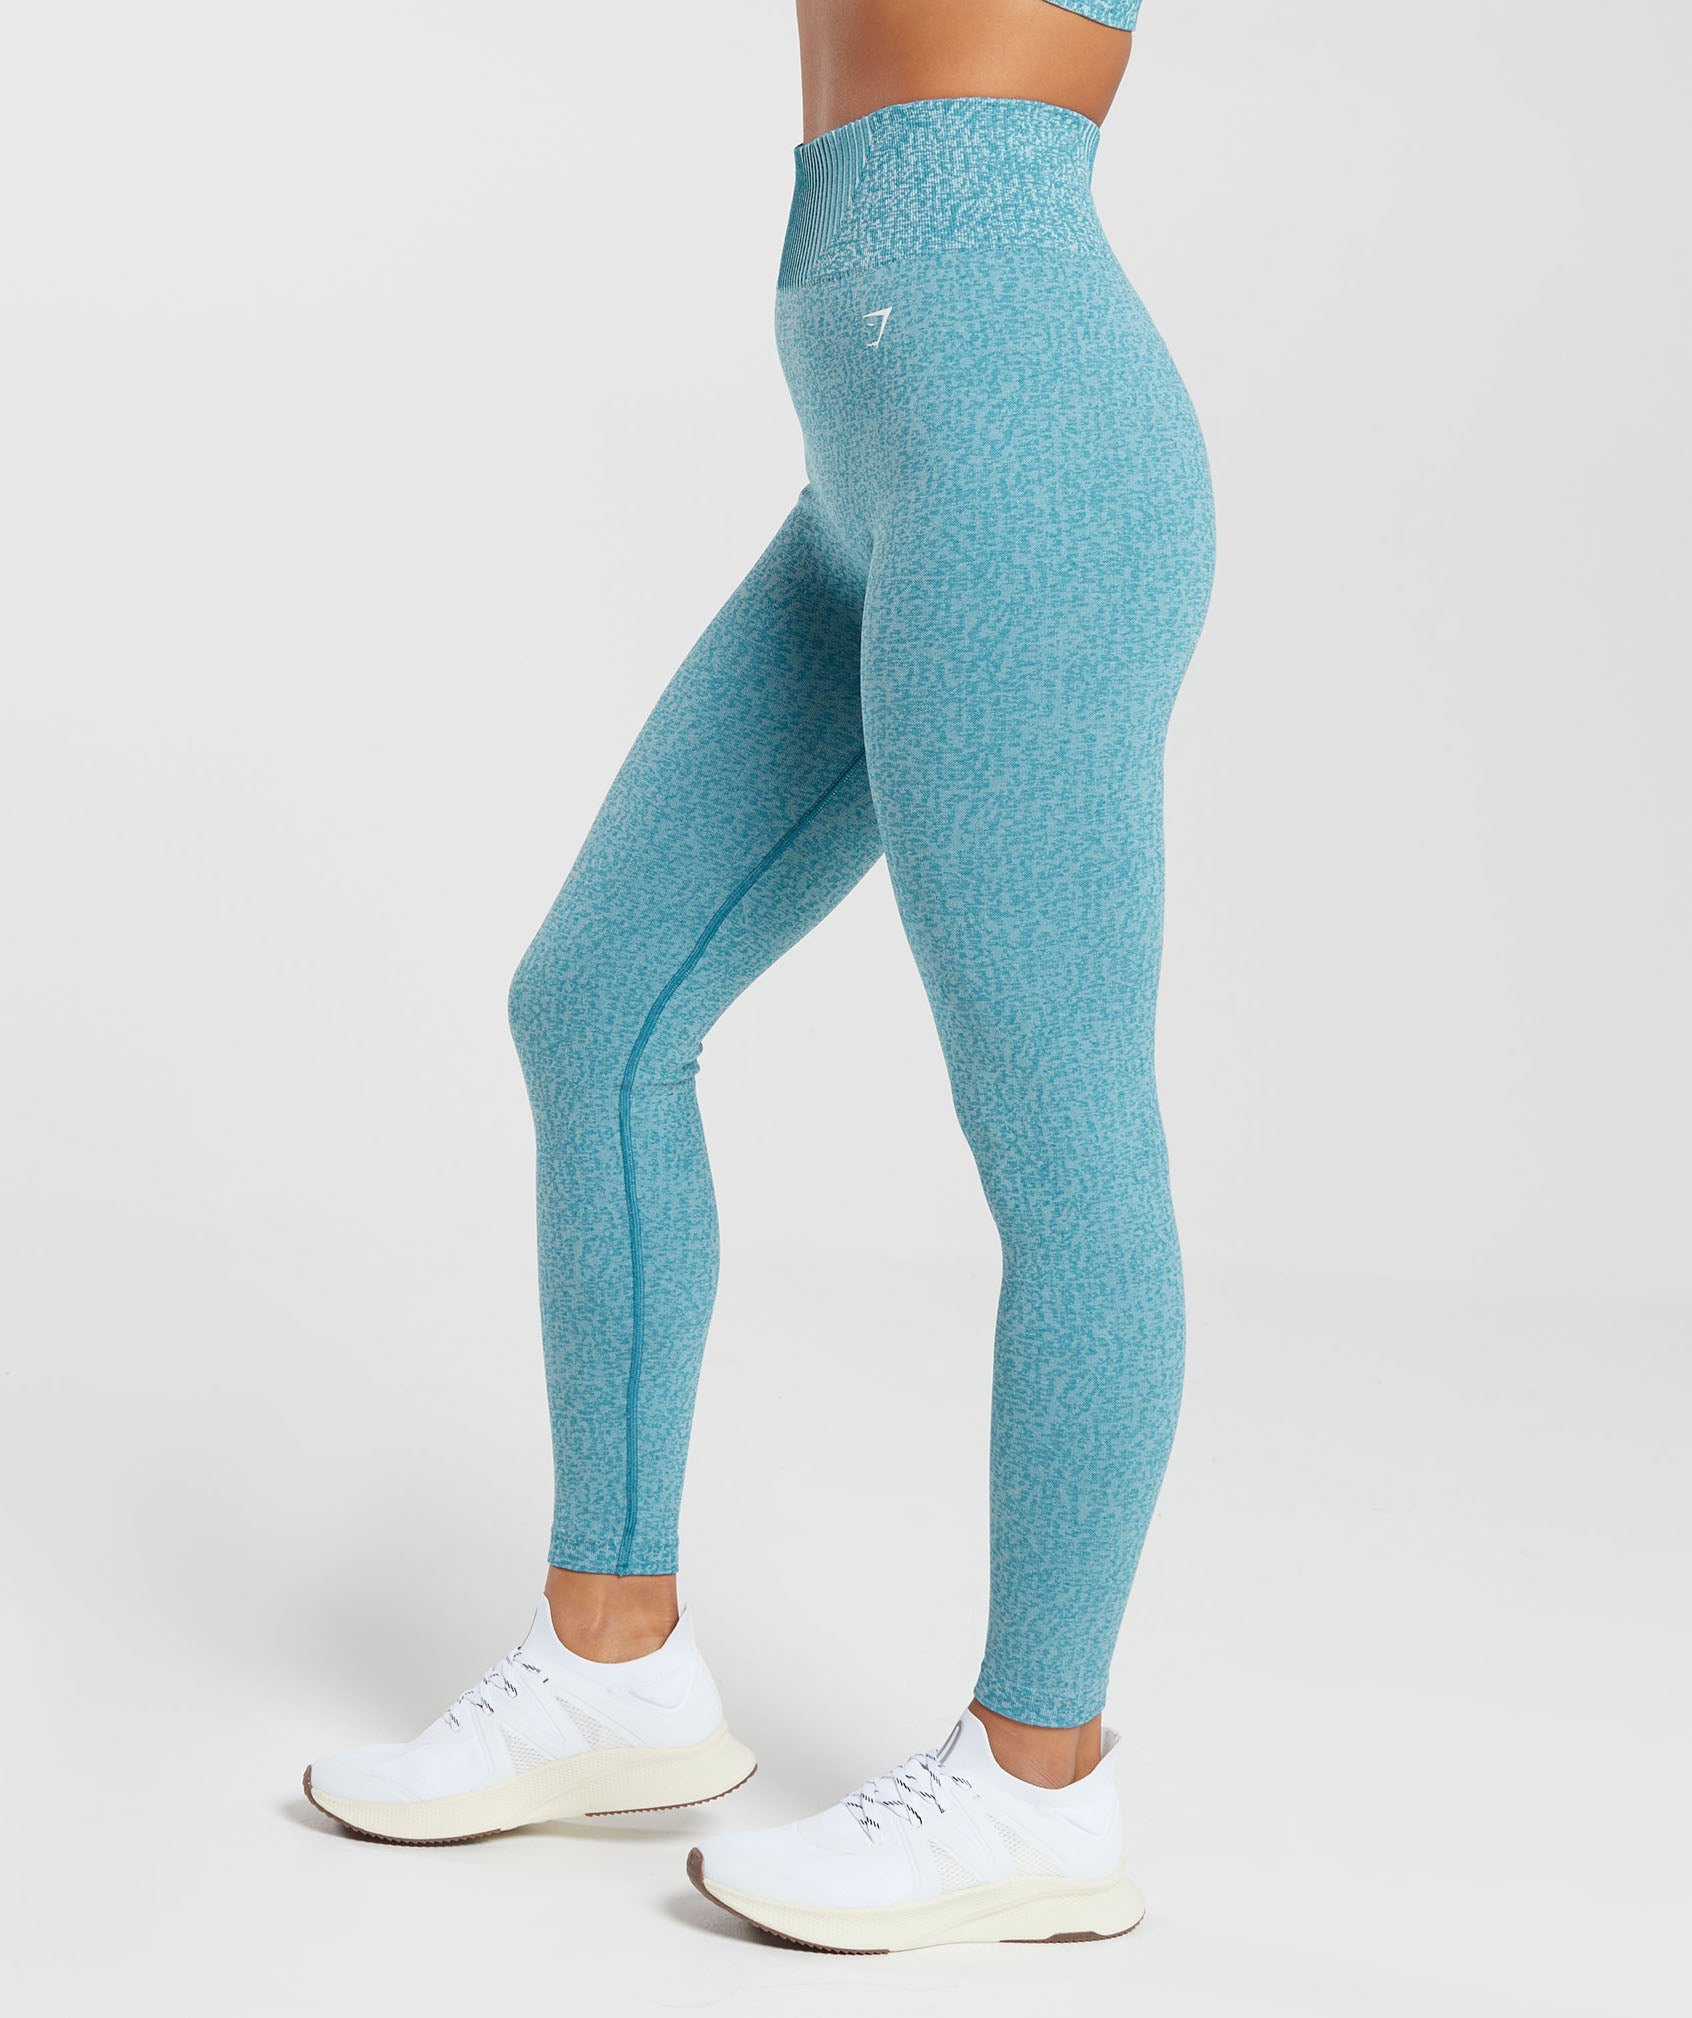 Gymshark flawless knit tights Sea Blue on Mercari